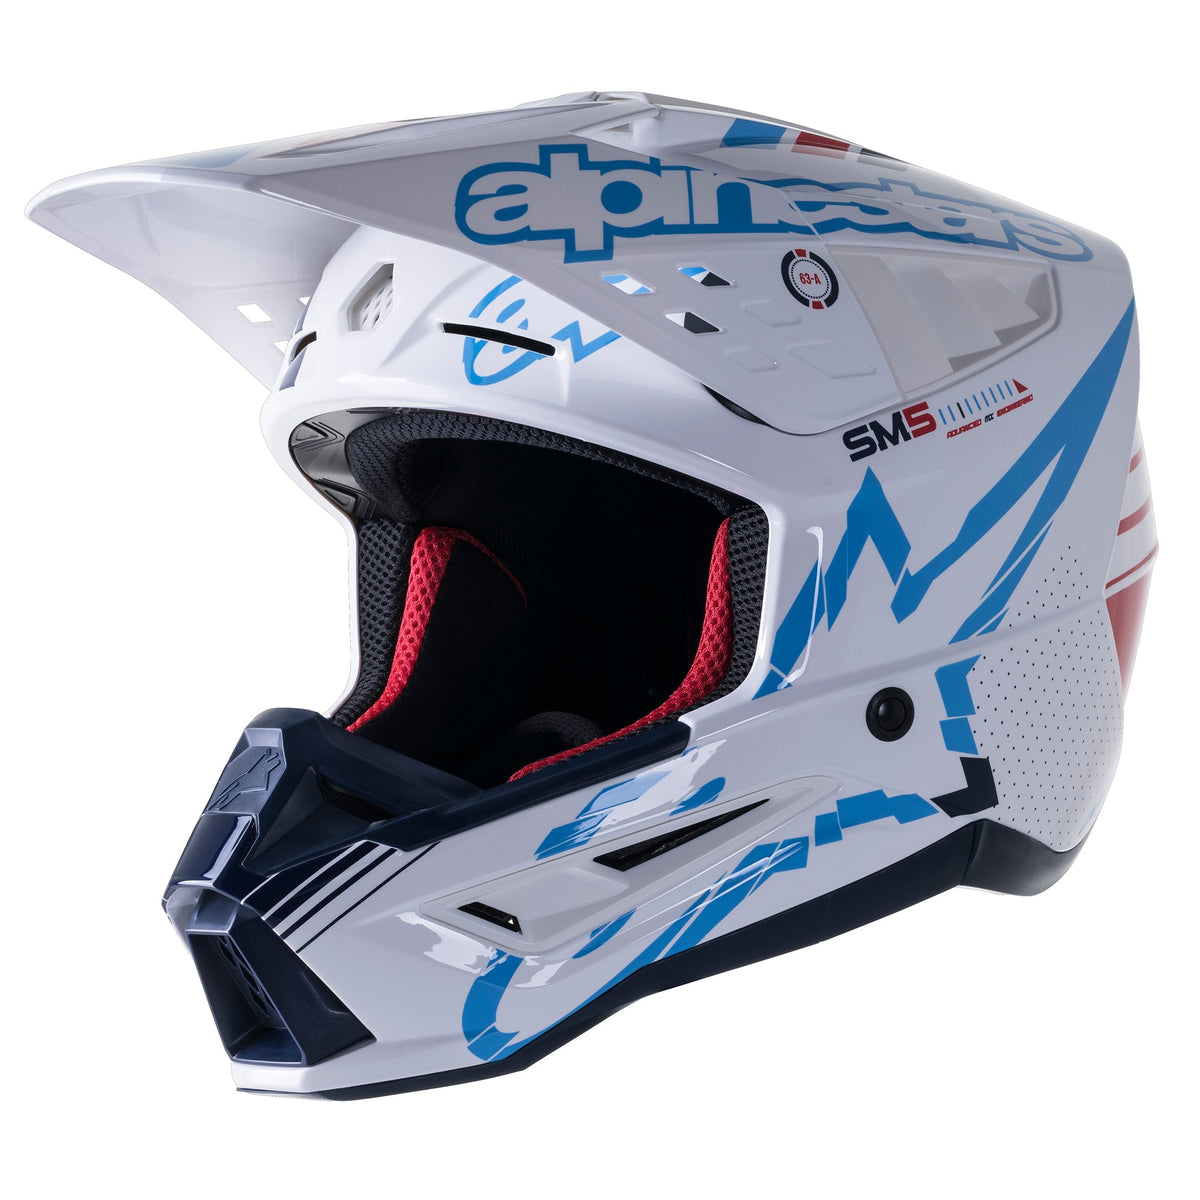 SM5 Action Helmet